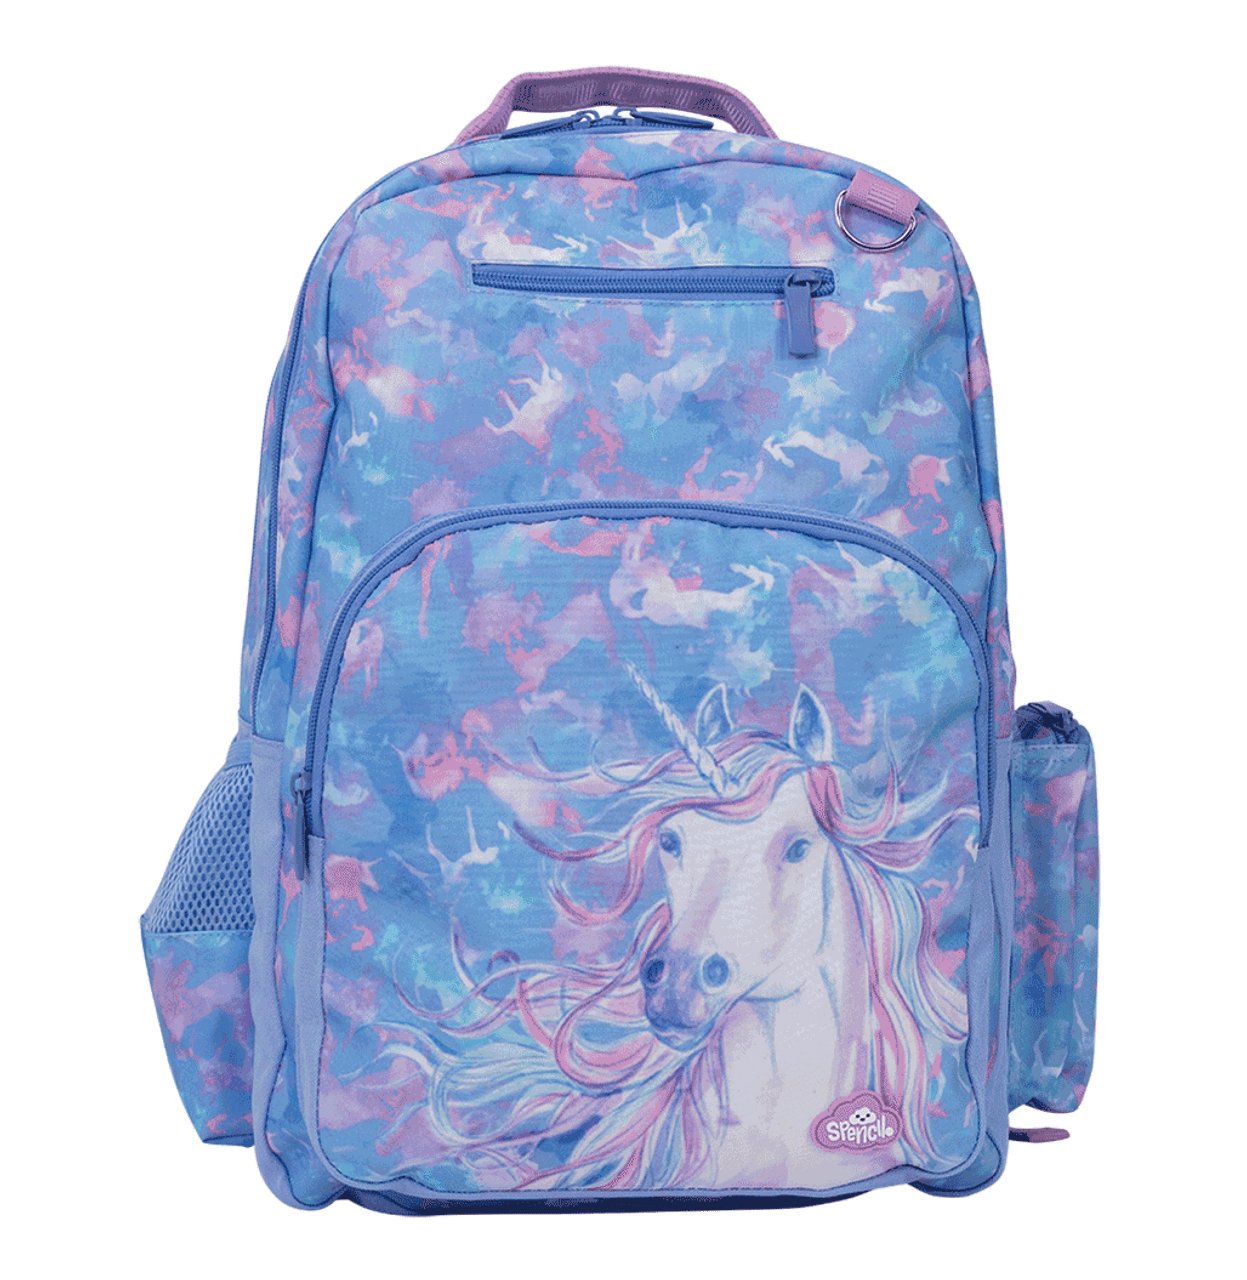 Big Kids Backpack - Unicorn Magic